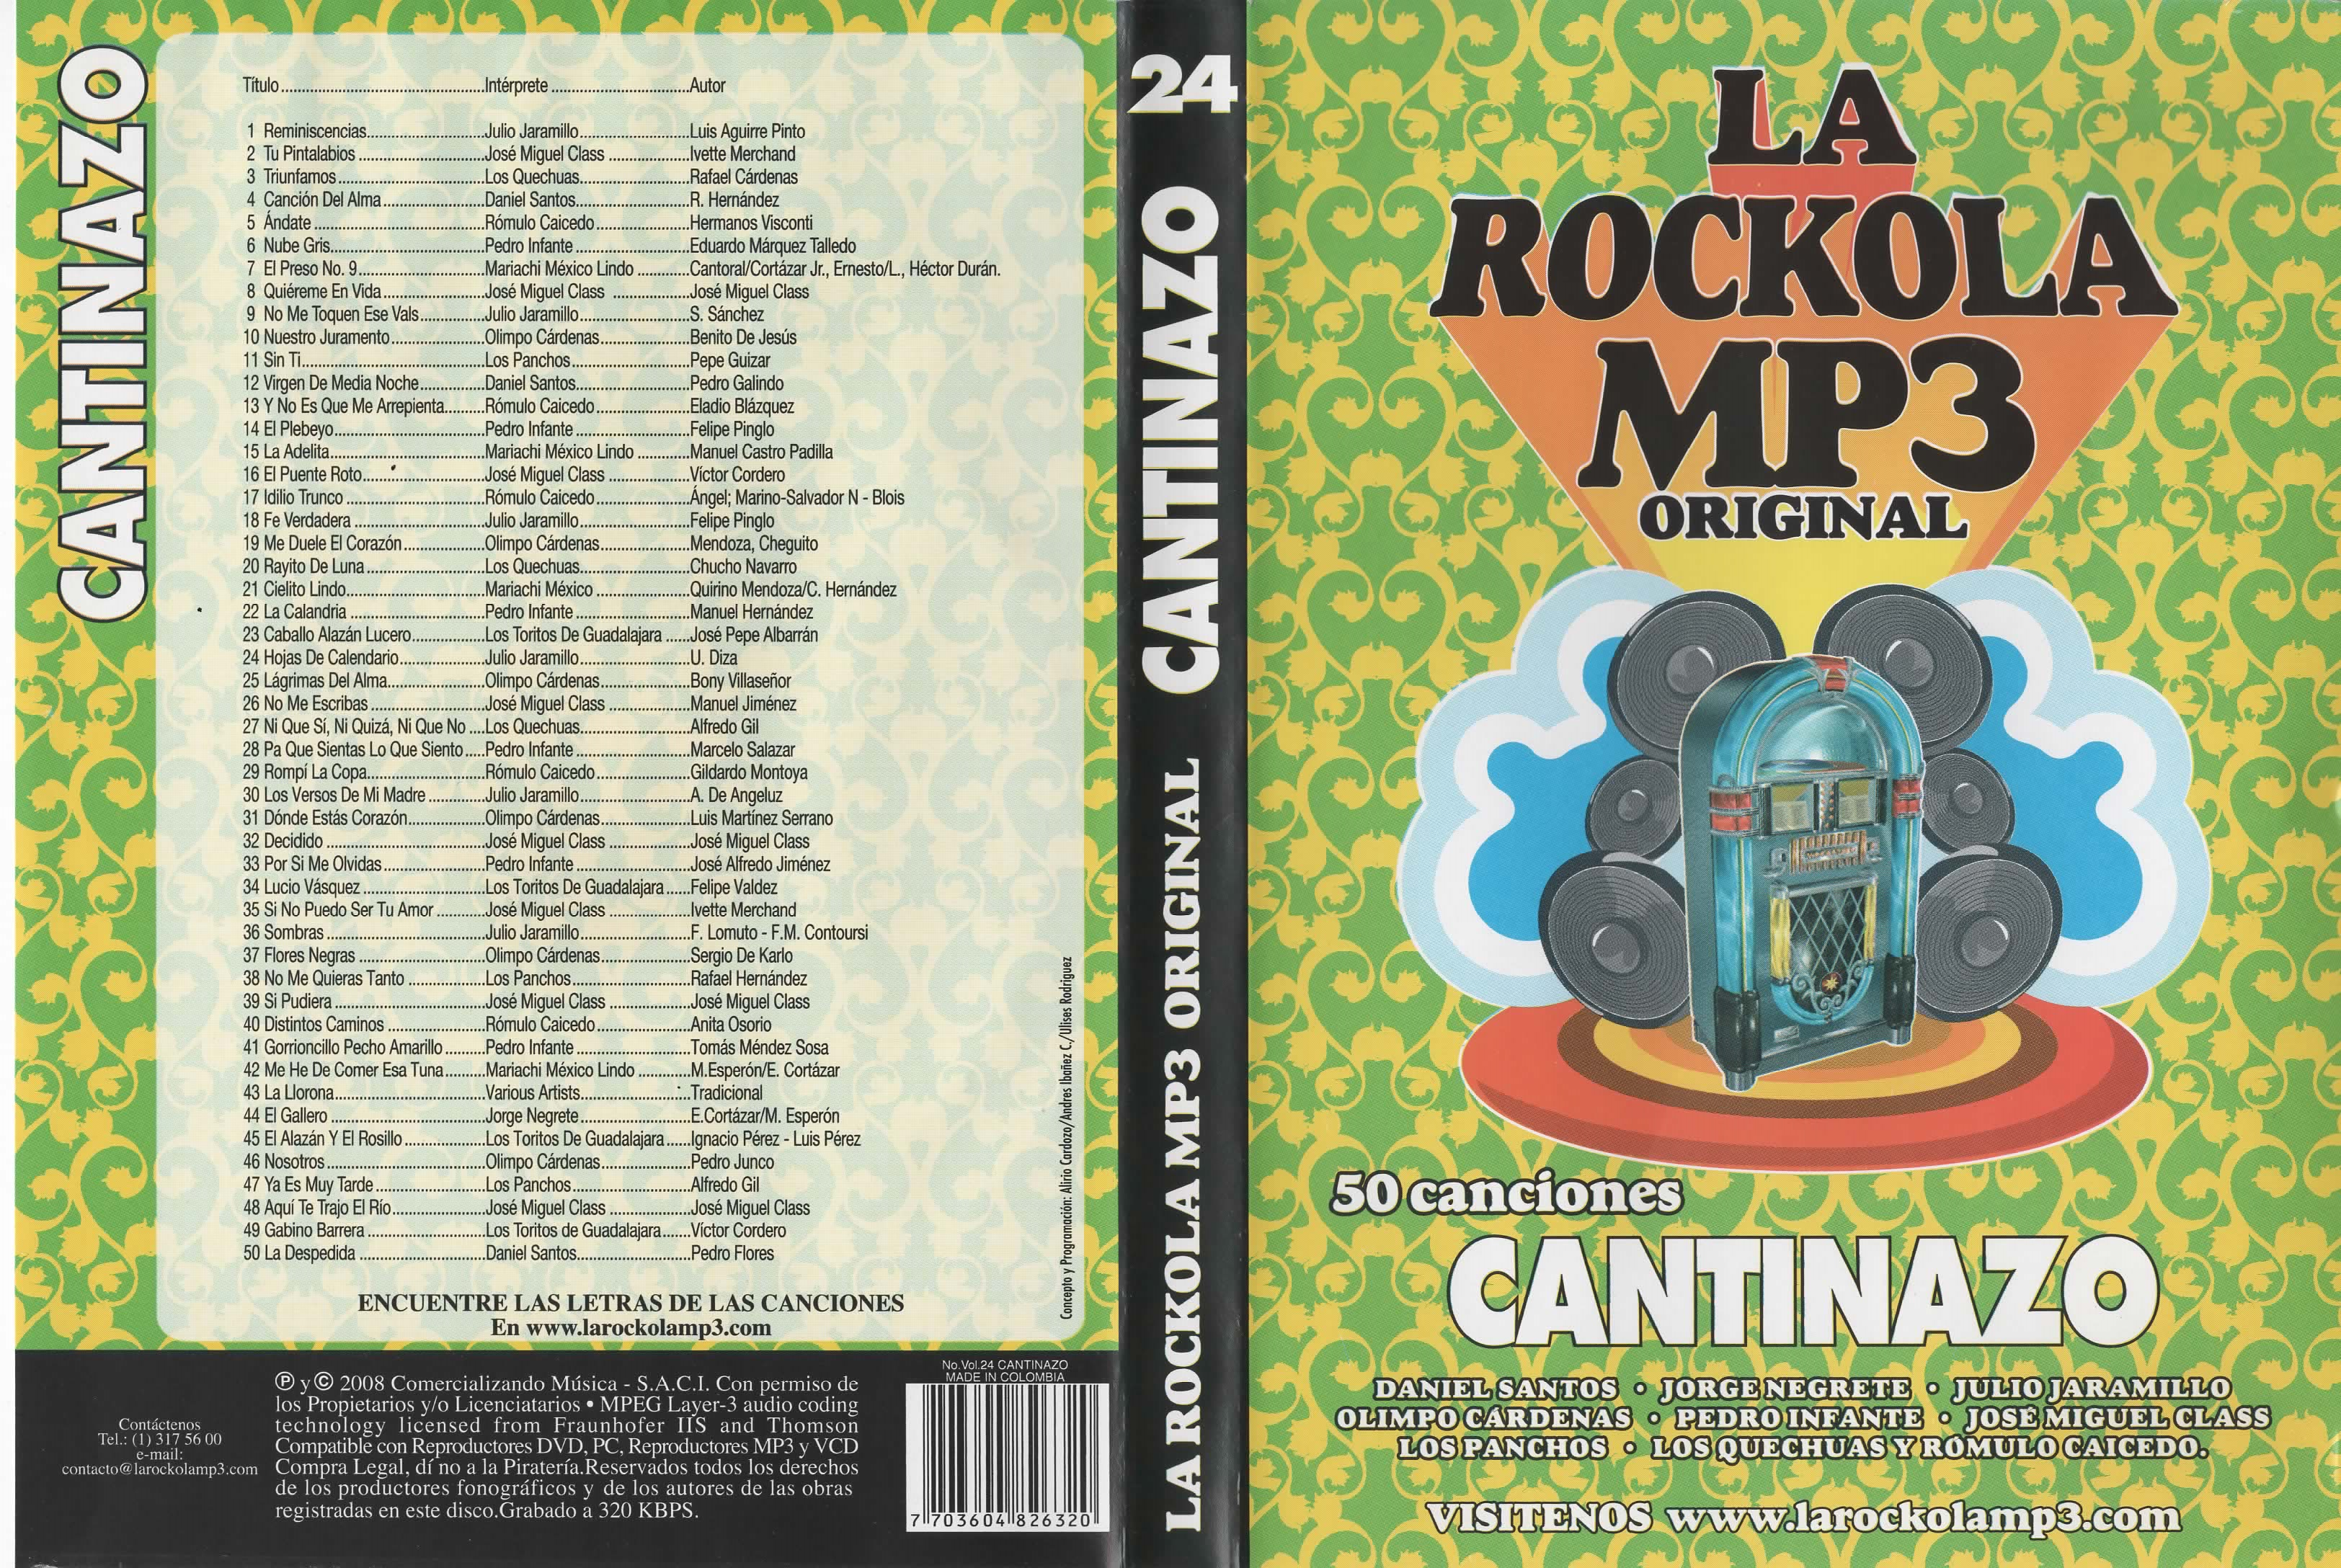 Rockola mp3 cantinazo No. 24